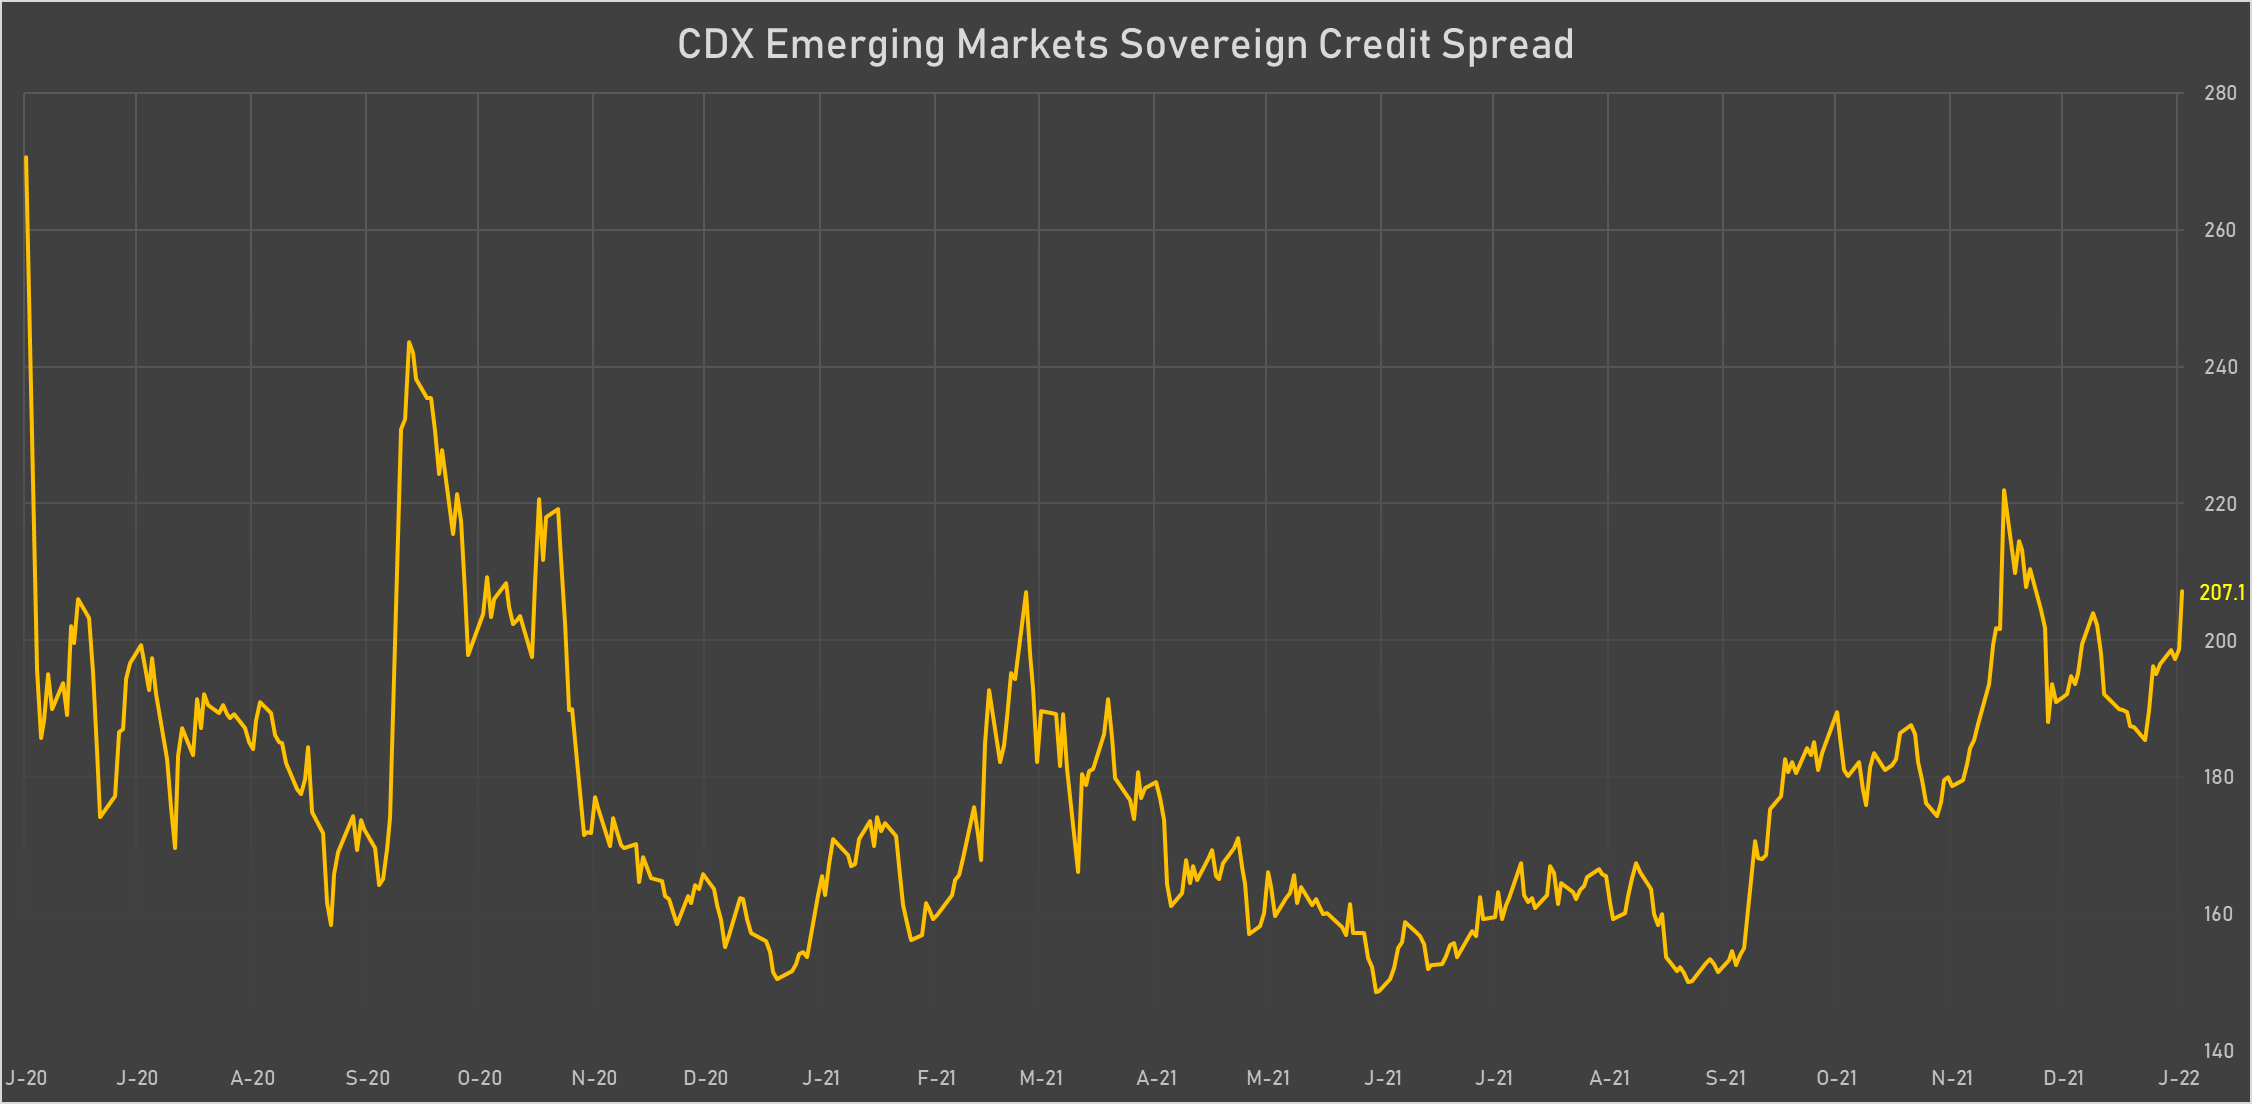 CDX EM Sovereign Credit Spread Index | Sources: phipost.com, Refinitiv data